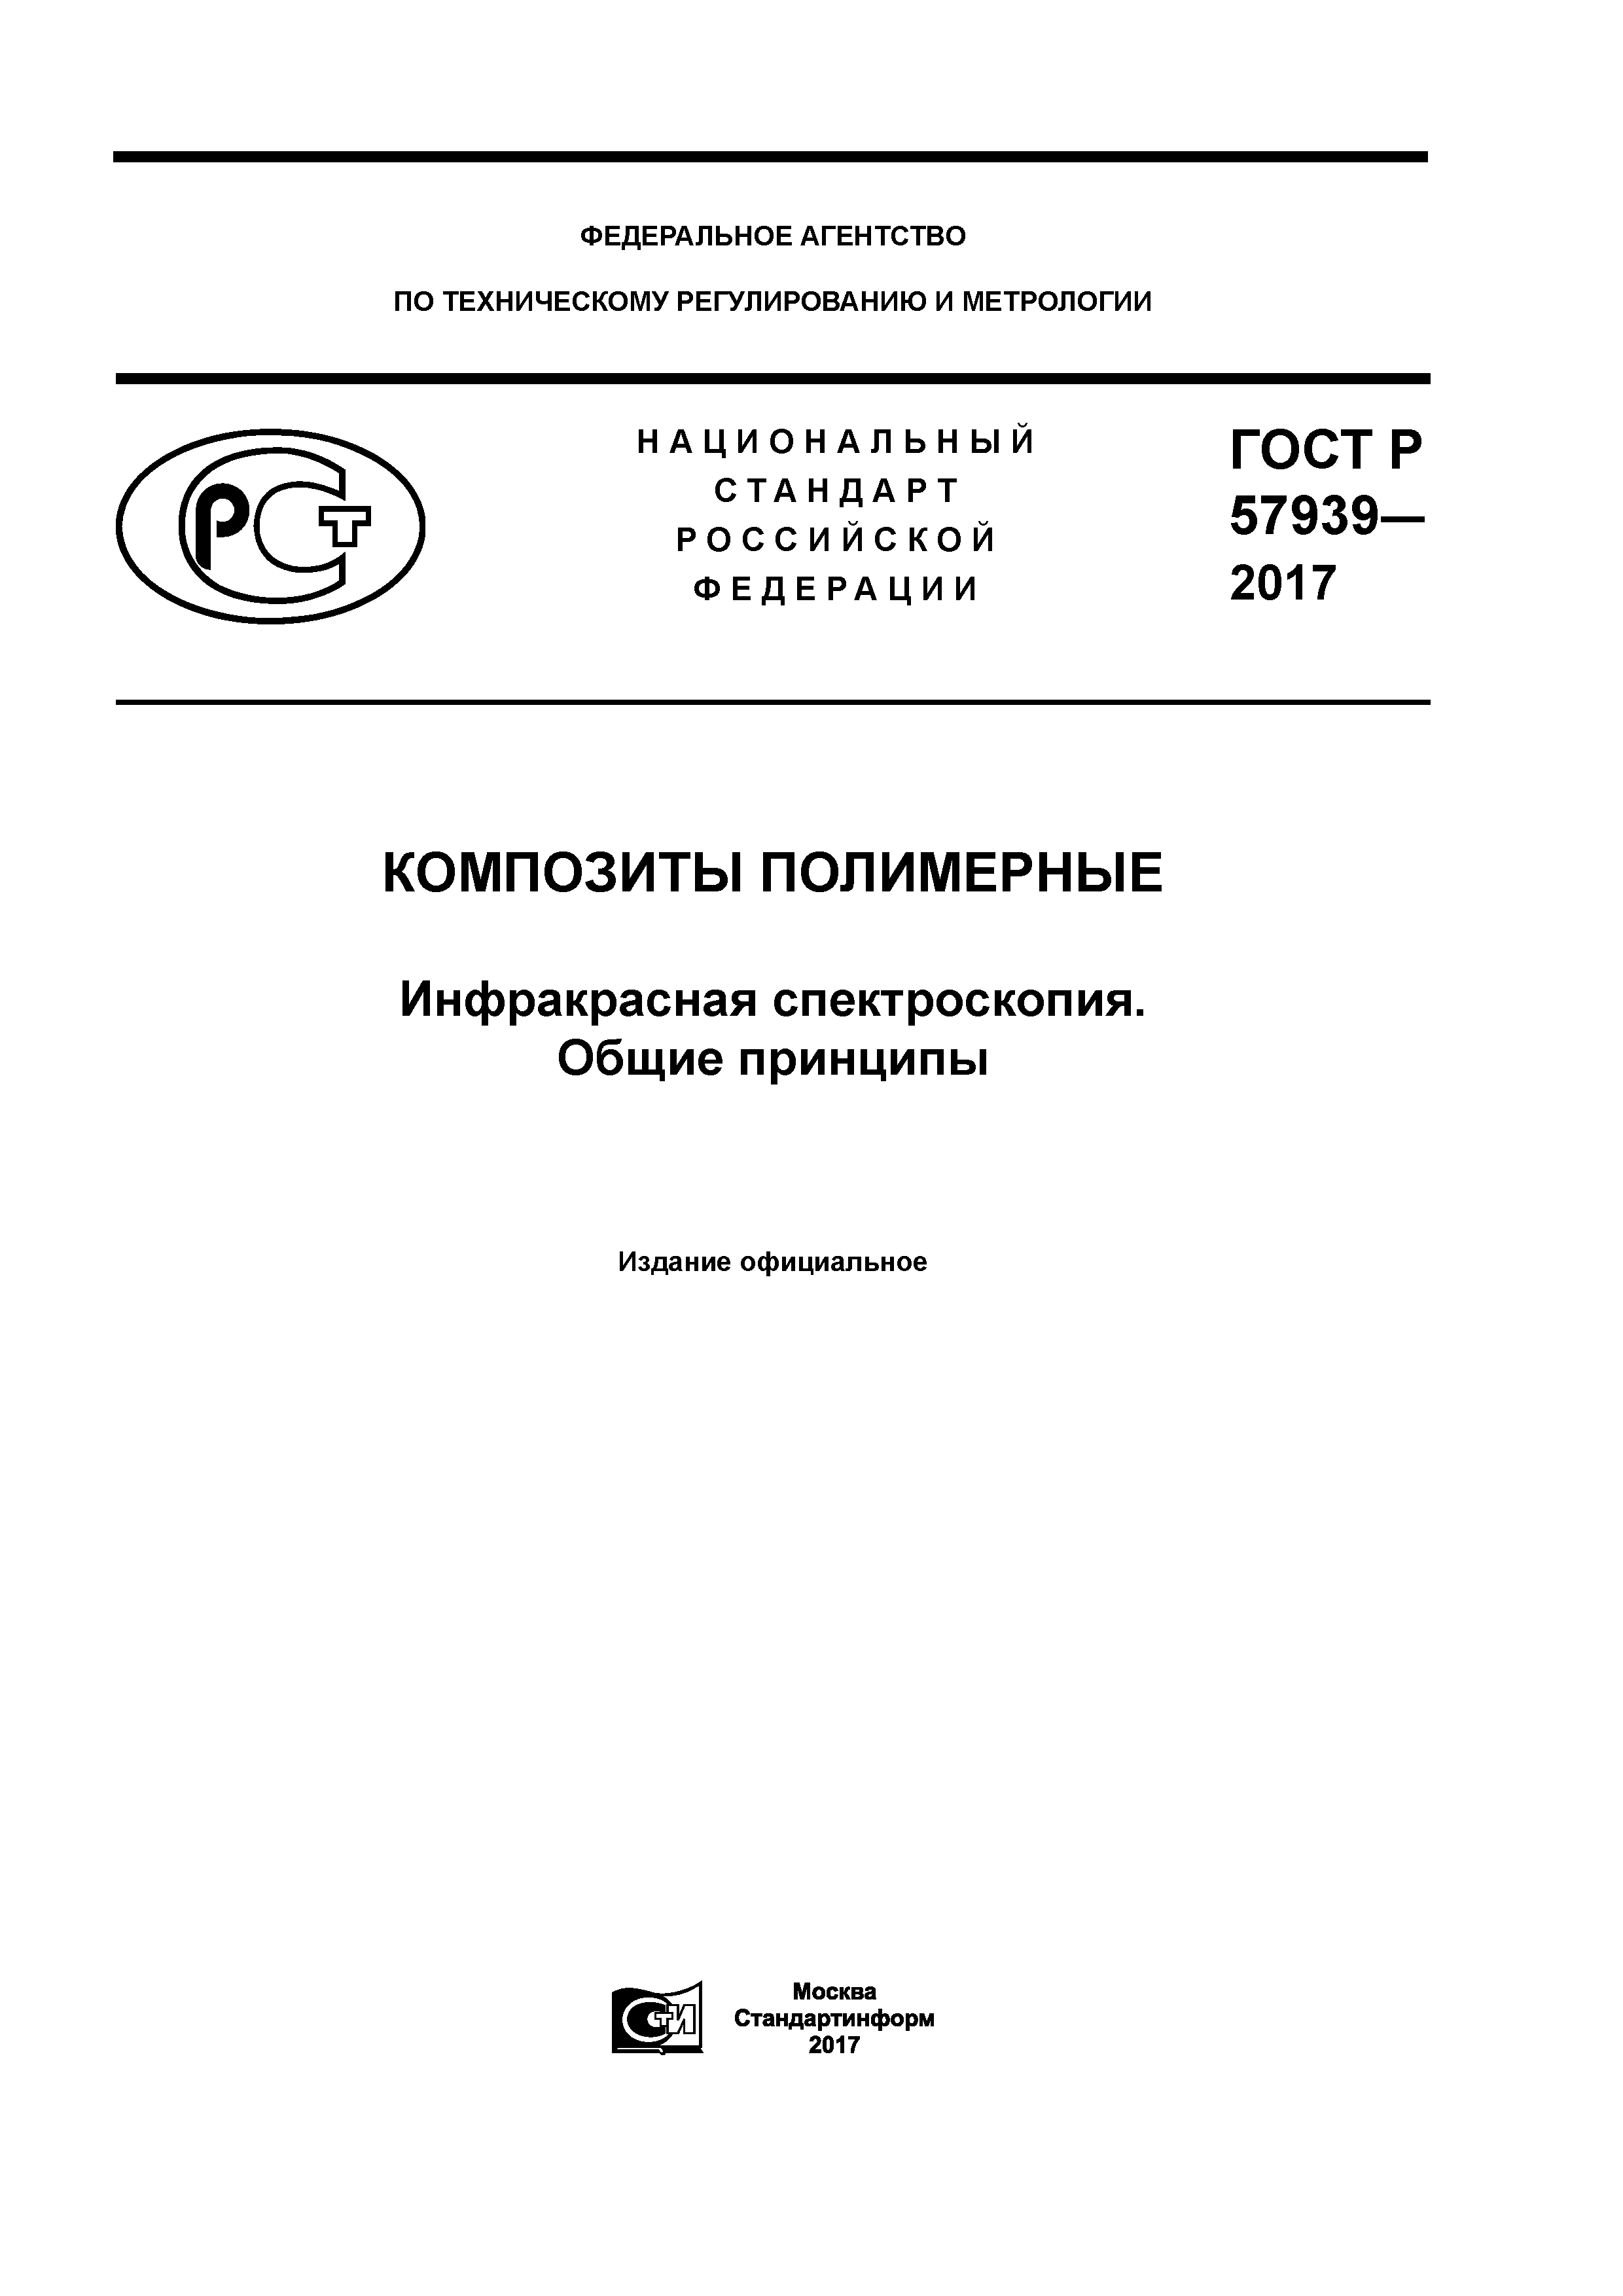 ГОСТ Р 57939-2017